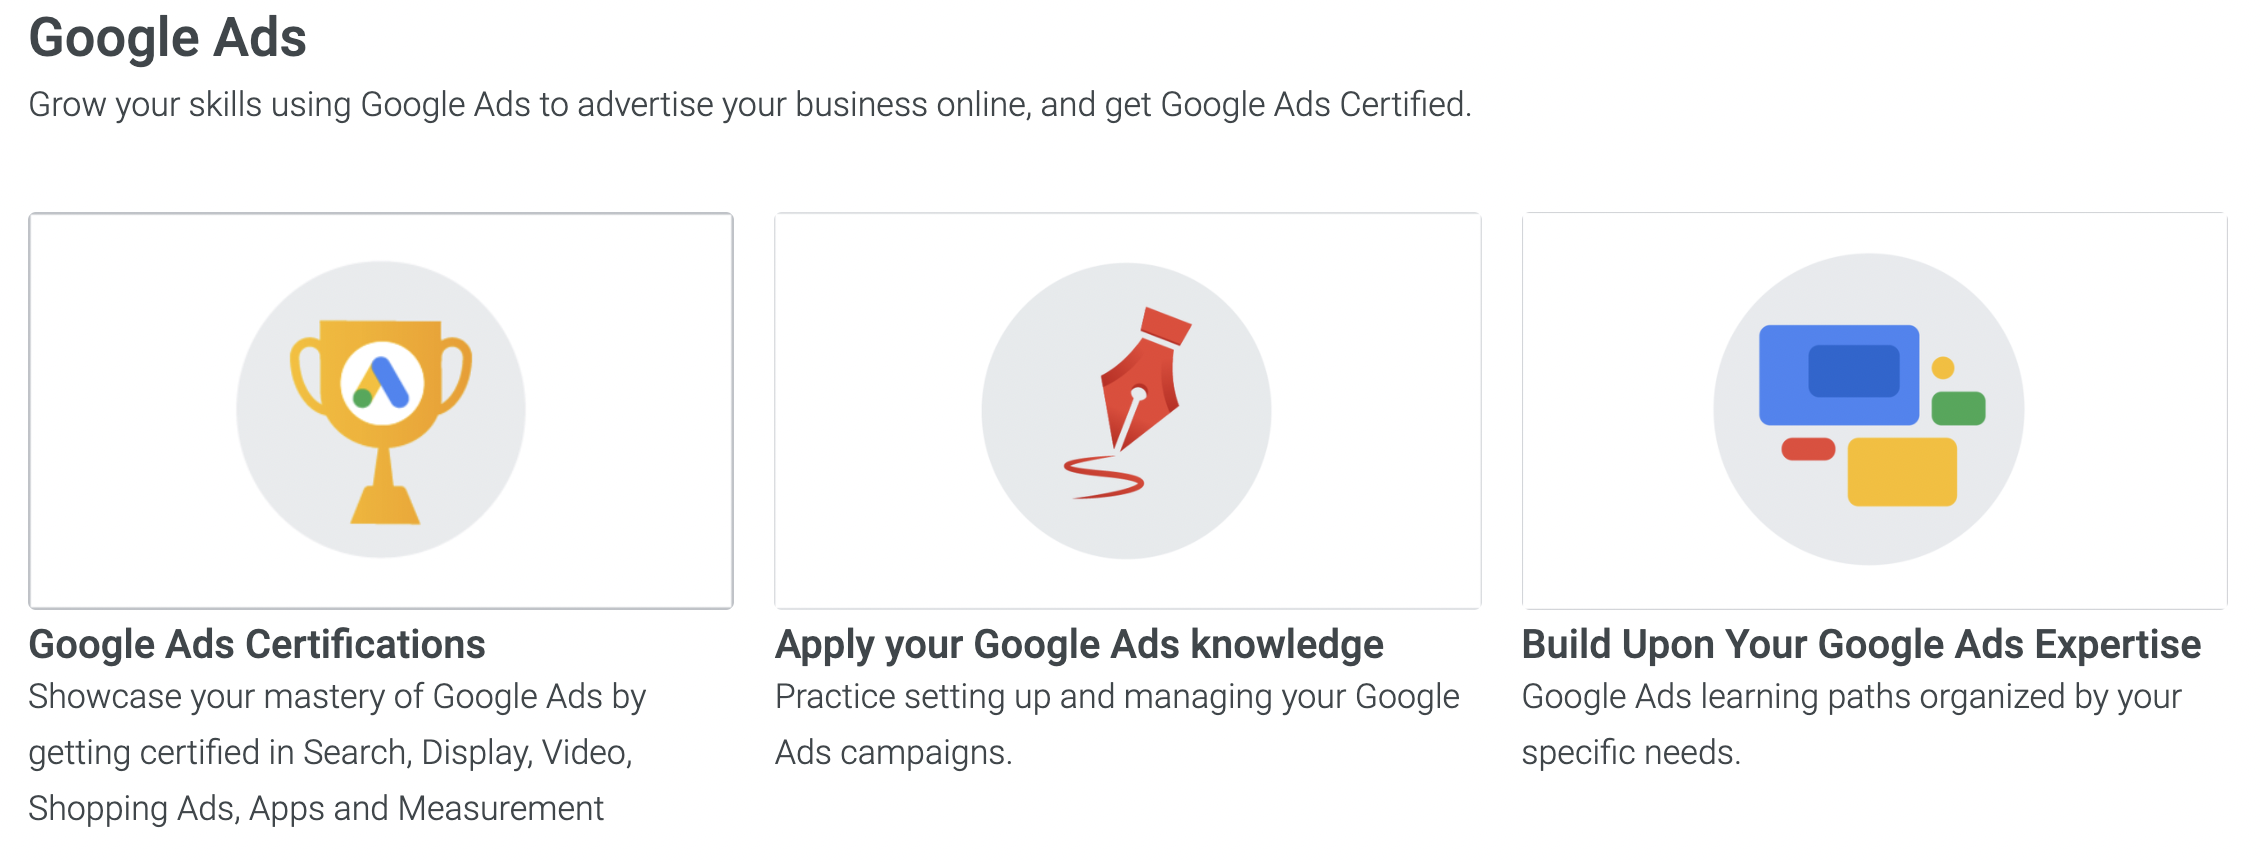 Google Ads certification. 